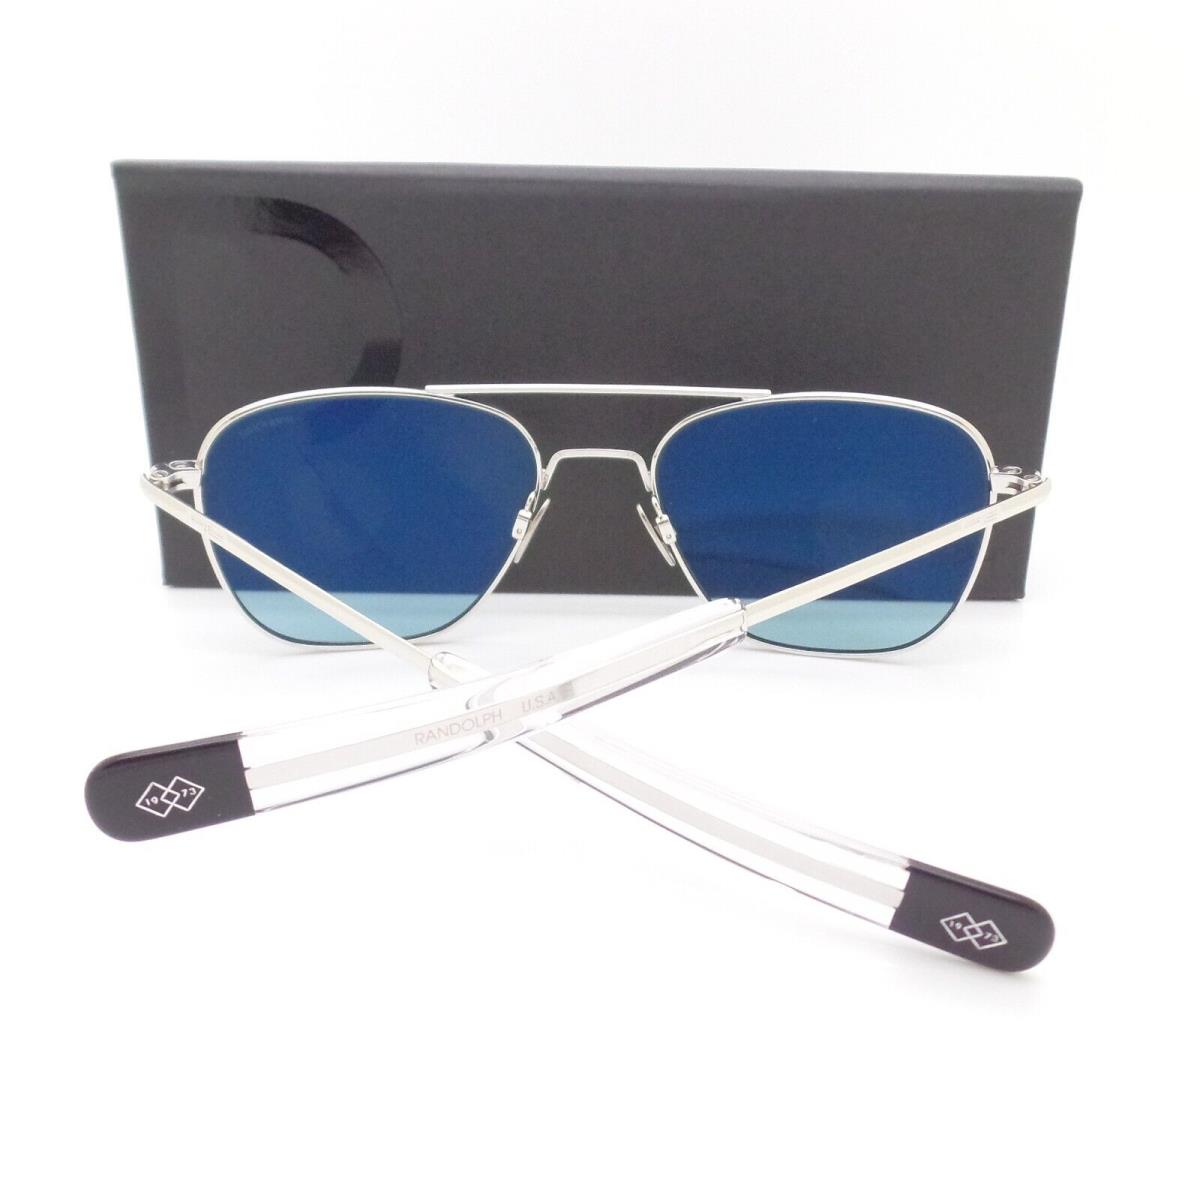 Randolph Engineering Aviator White Gold Blue Hydro Bayonet Usa Sunglasses - Frame: 23k White Gold, Lens: Blue Hydro